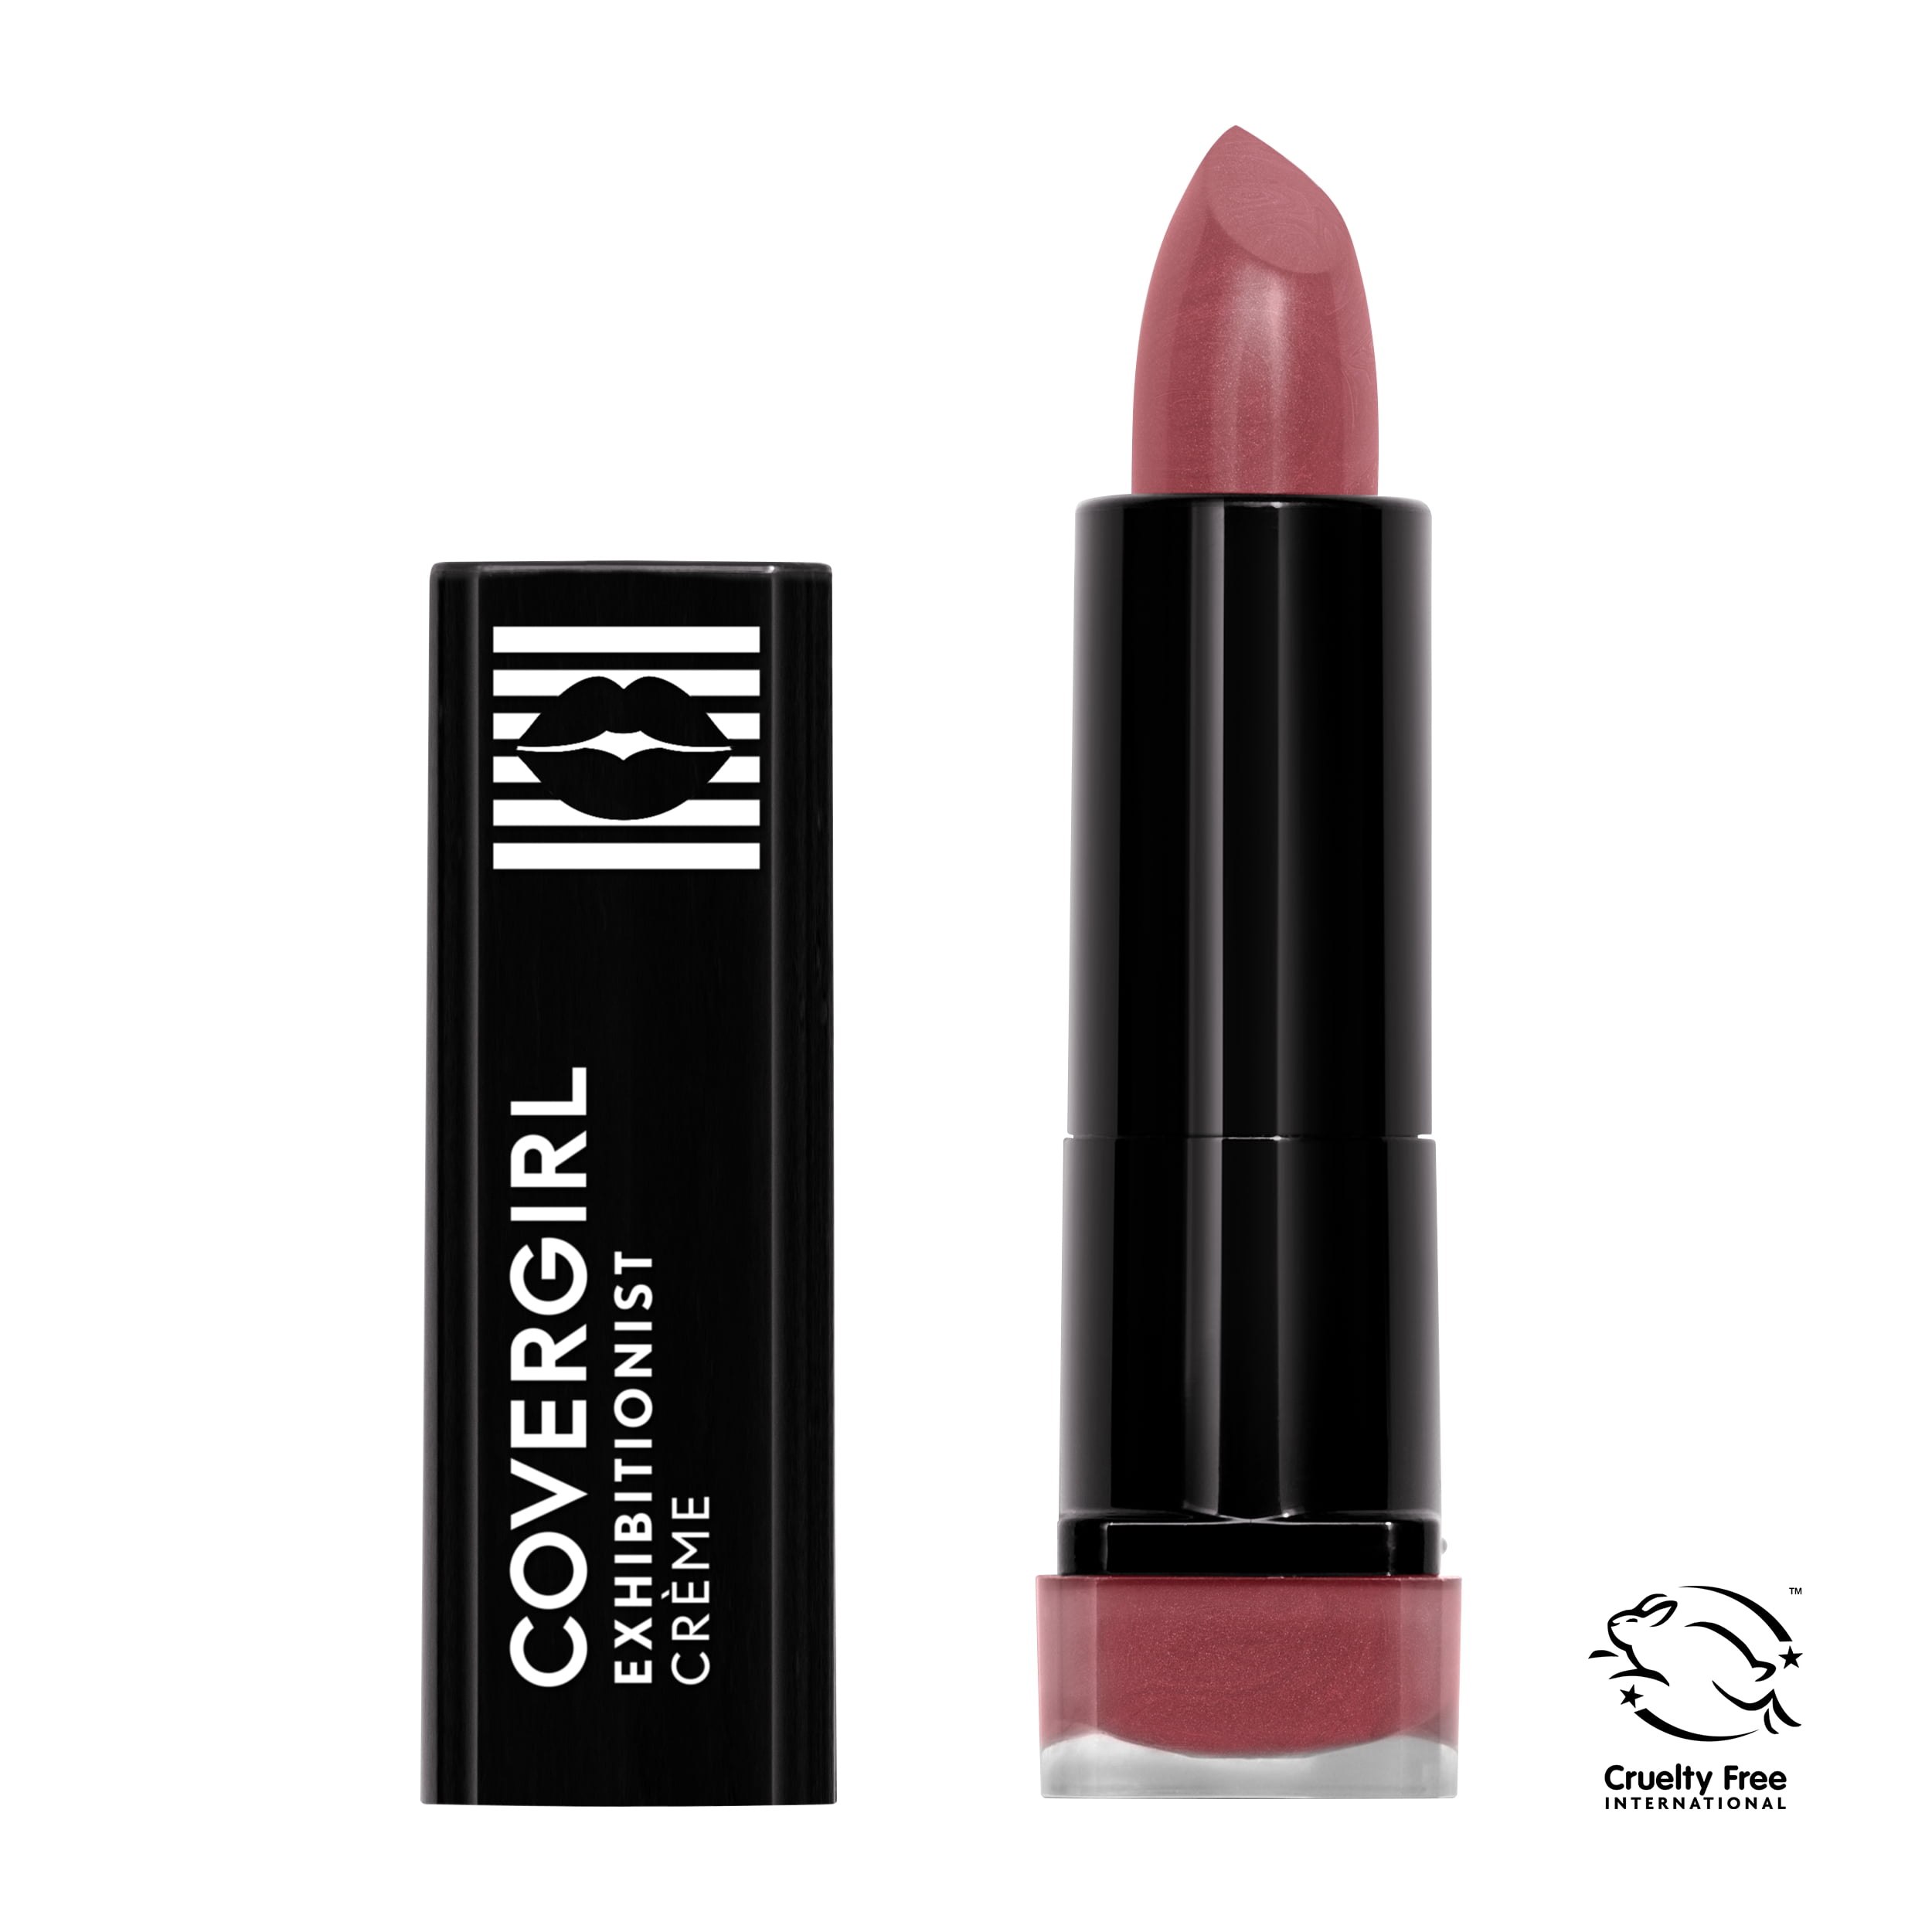 COVERGIRL Exhibitionist Cream Lipstick, Lit a Fire, 0.12 oz 